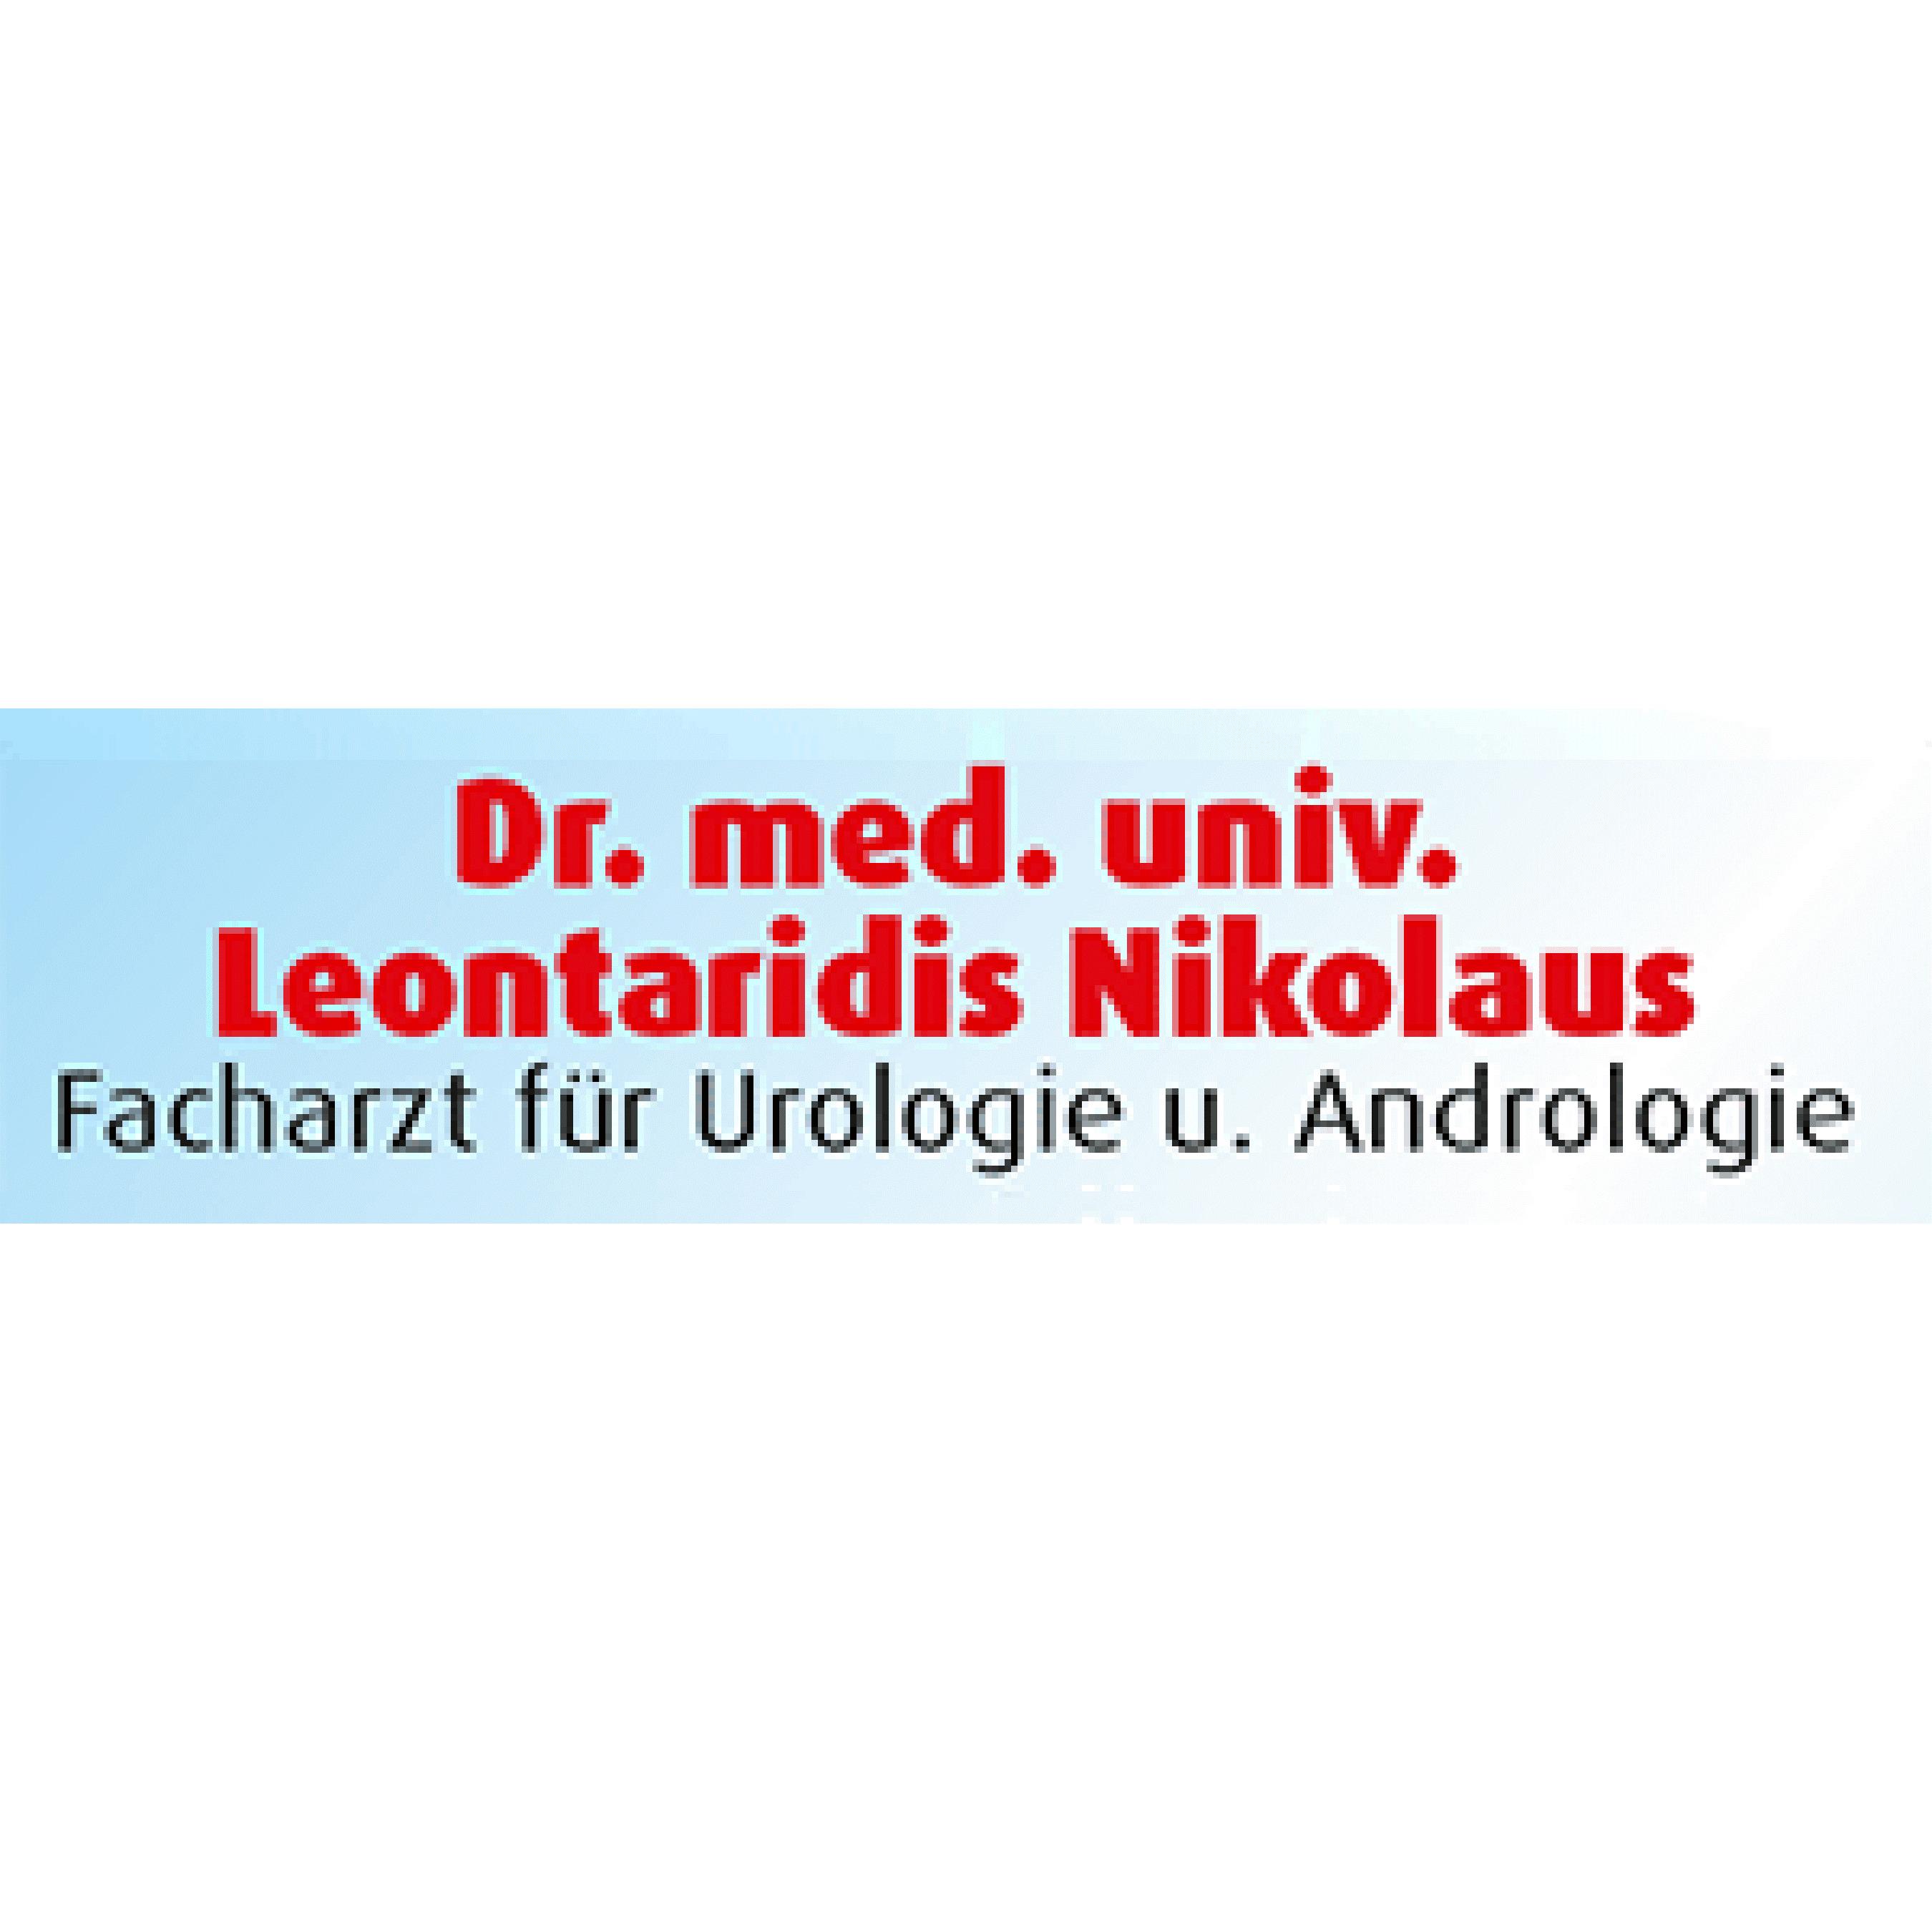 Dr. med. univ. Nikolaus Leontaridis Logo